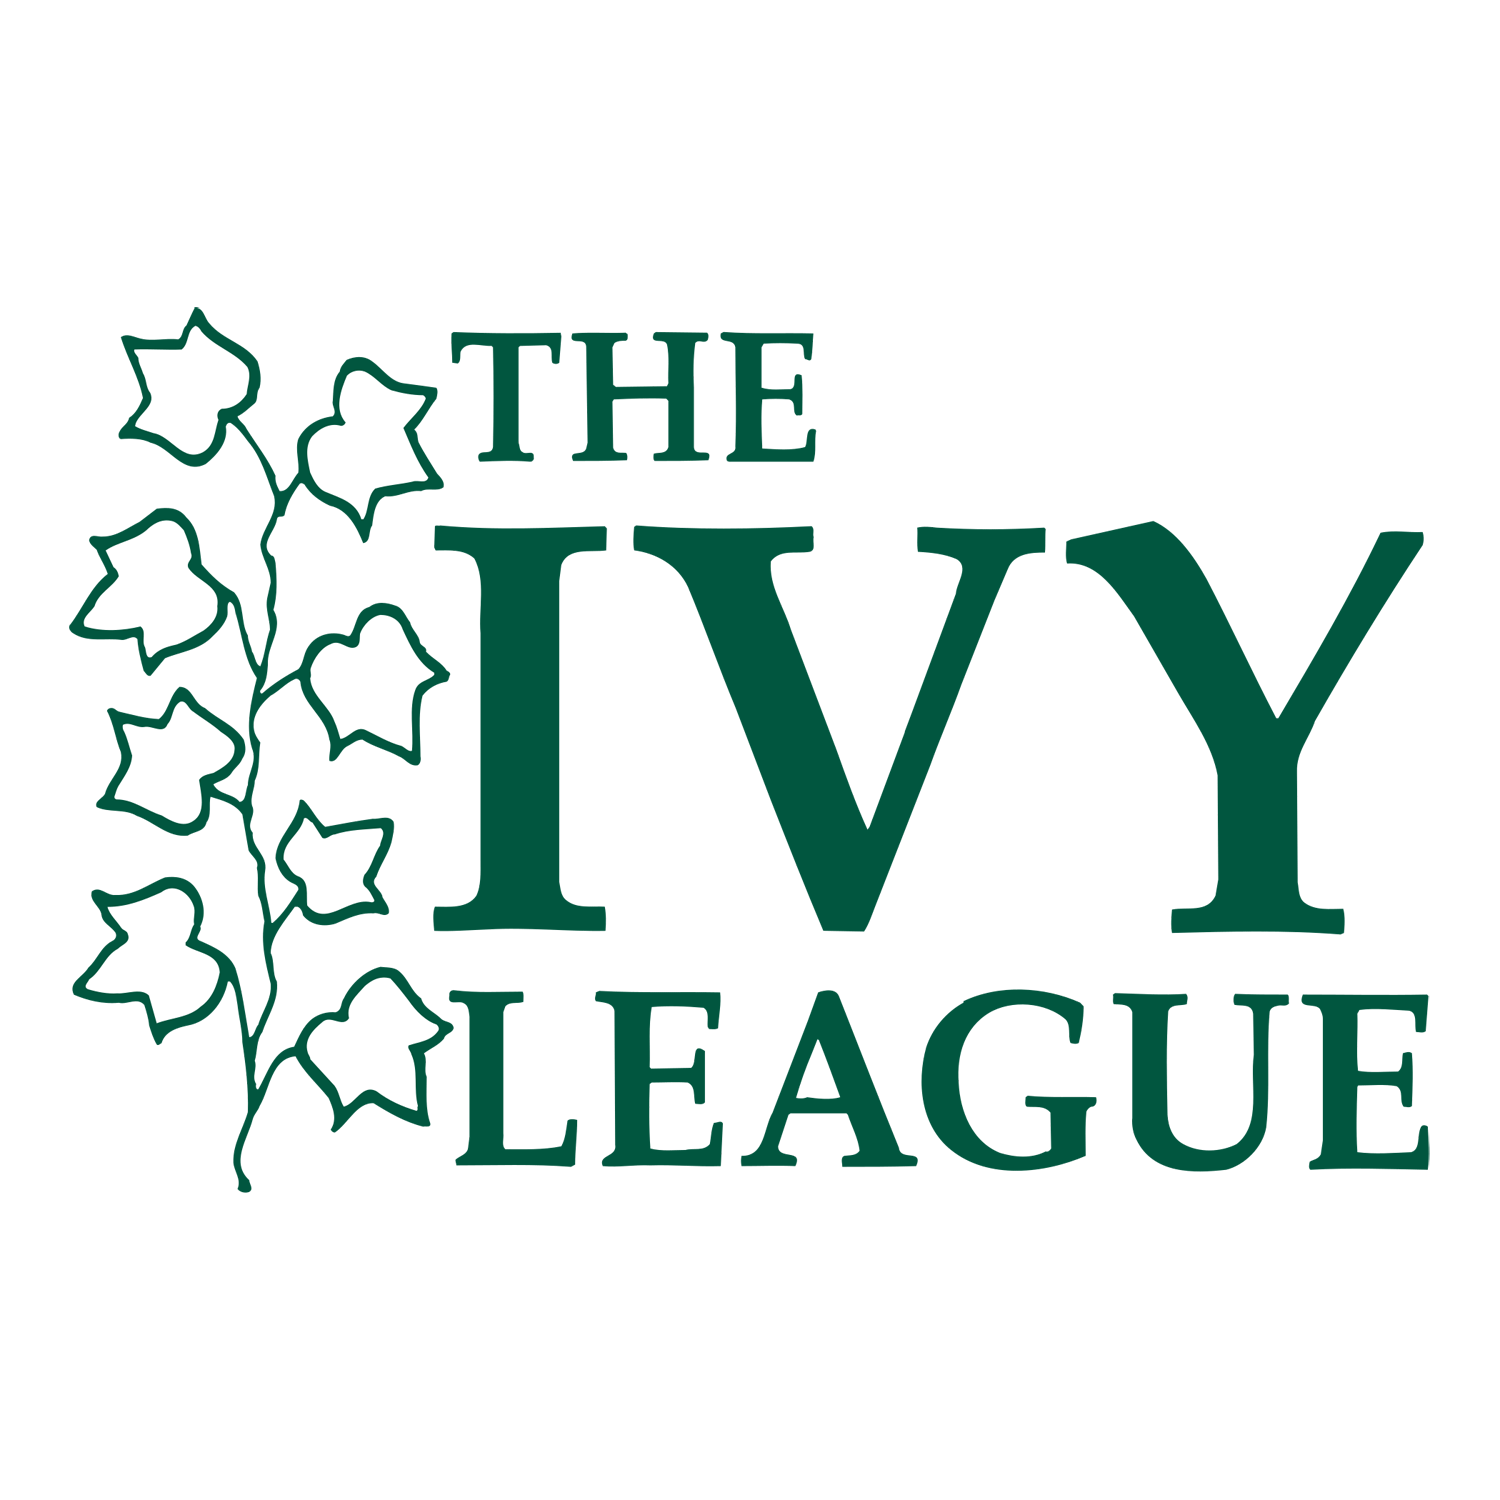 Ivy League logo